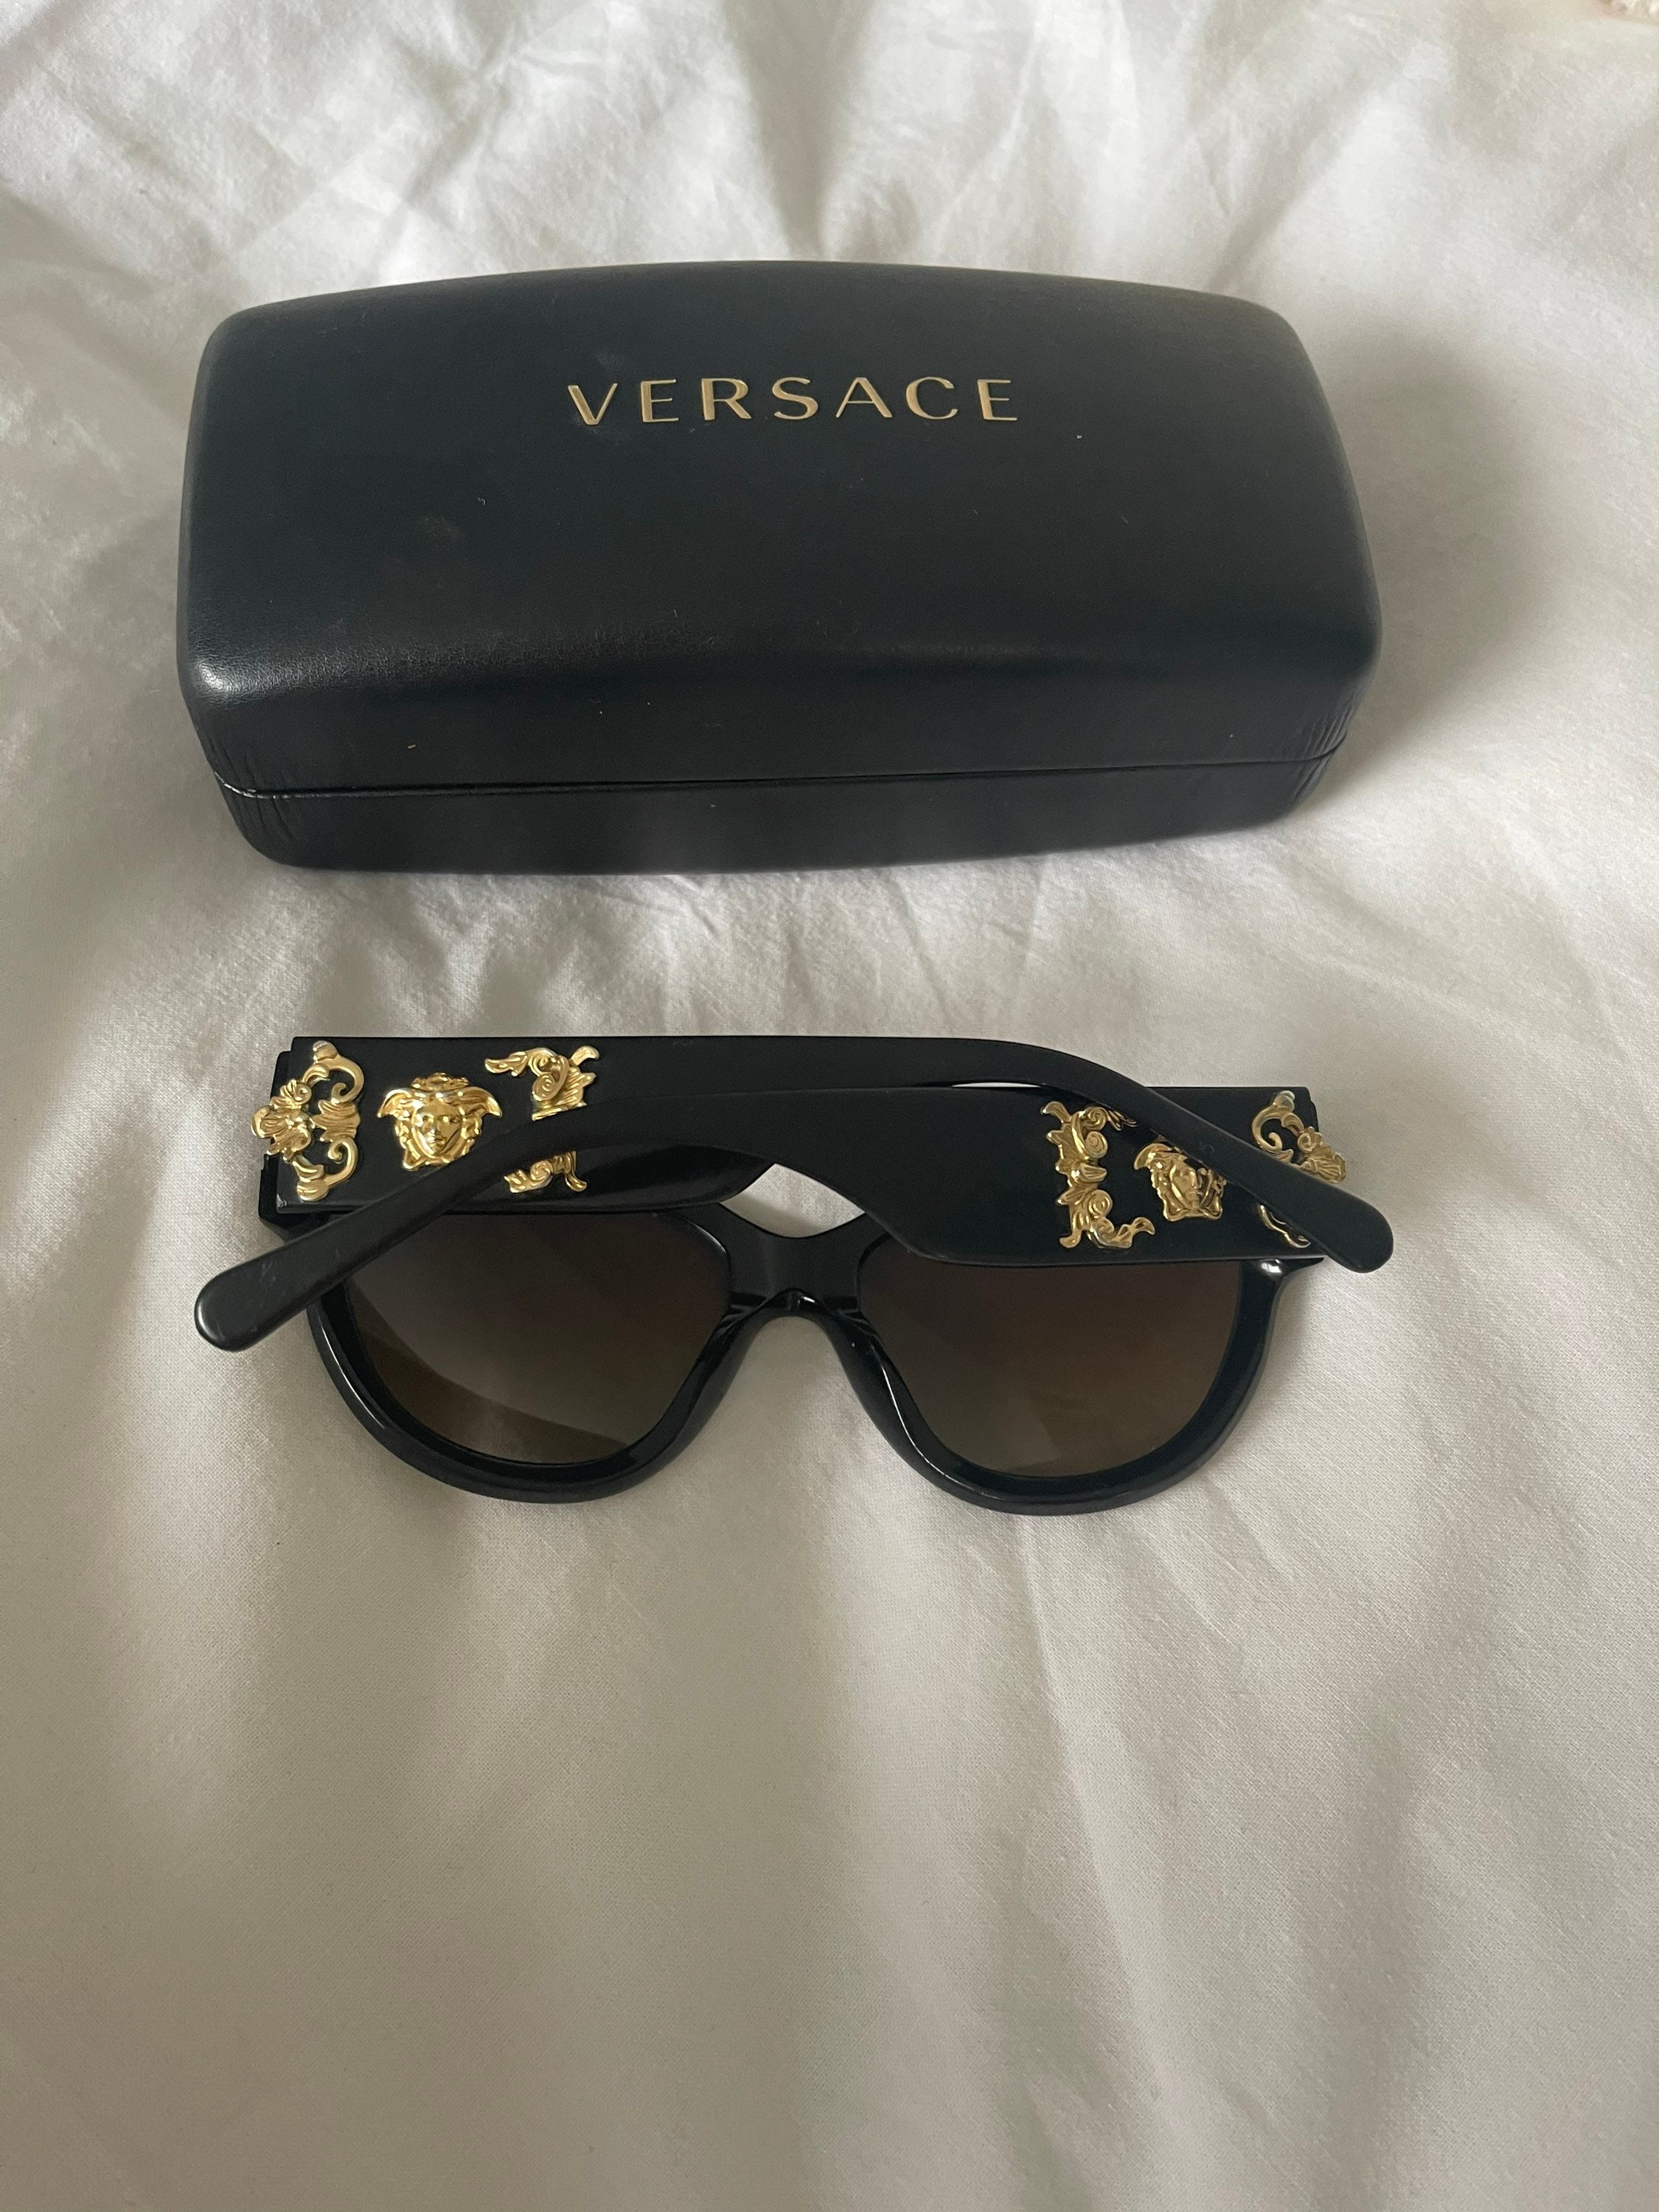 Visa Vermoorden Haat Vintage Versace Sunglasses - Etsy